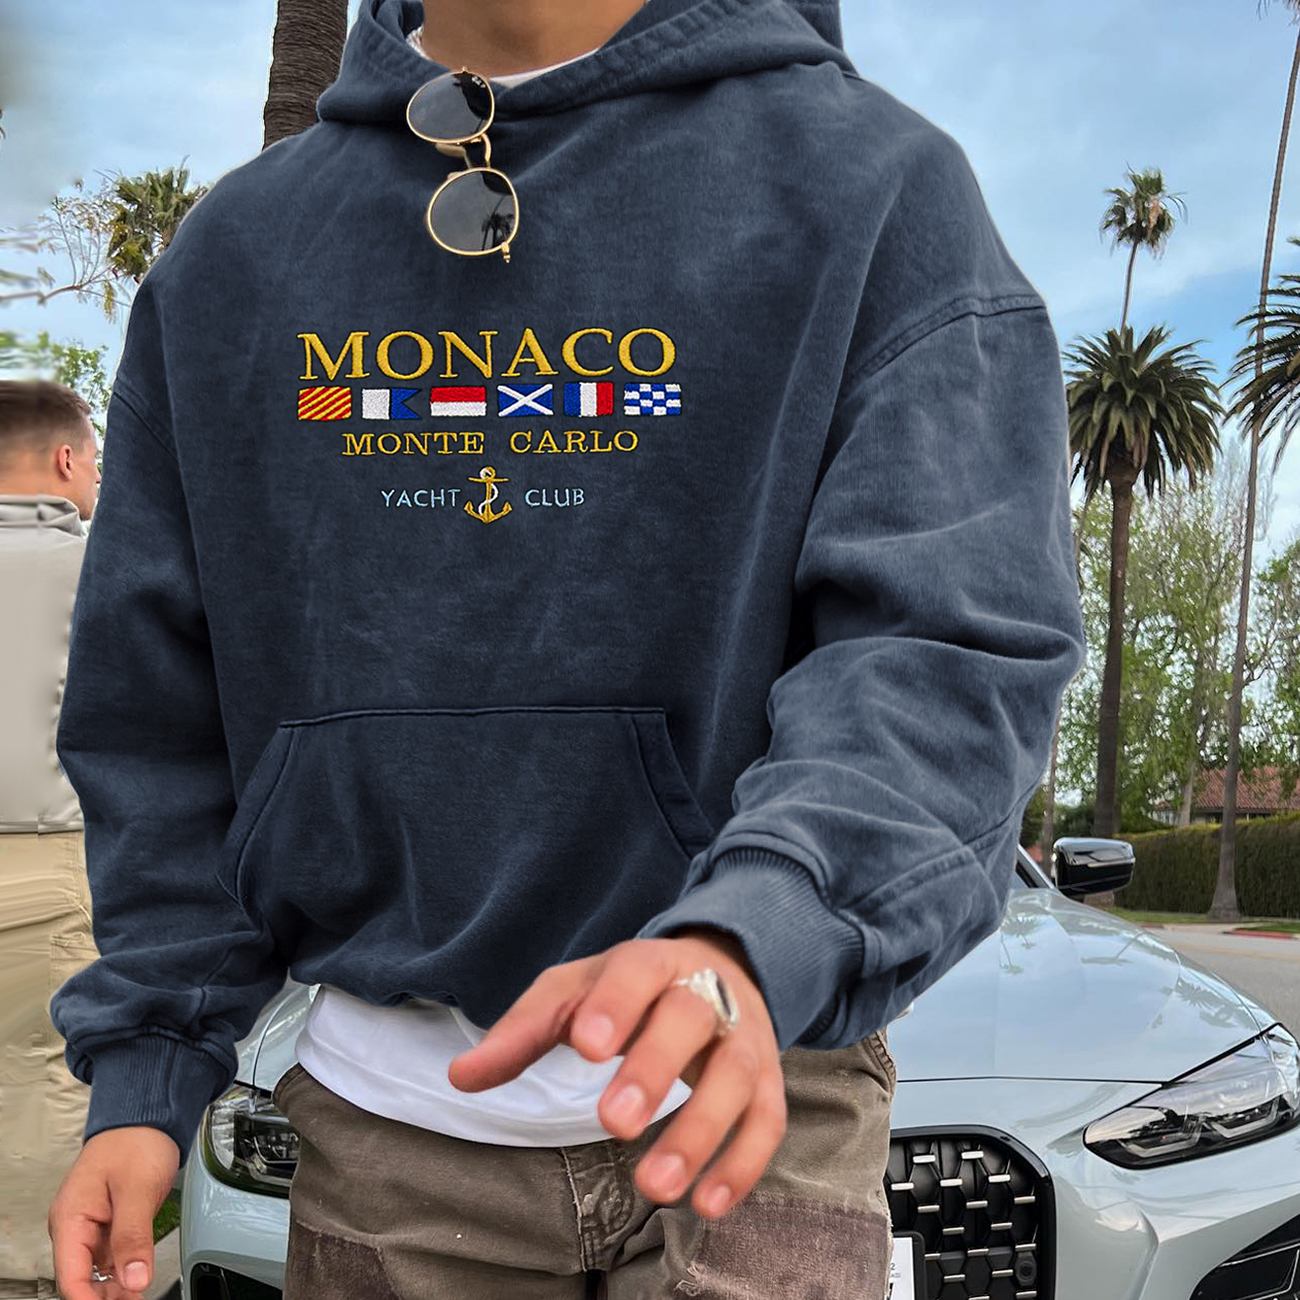 yacht club de monaco clothing